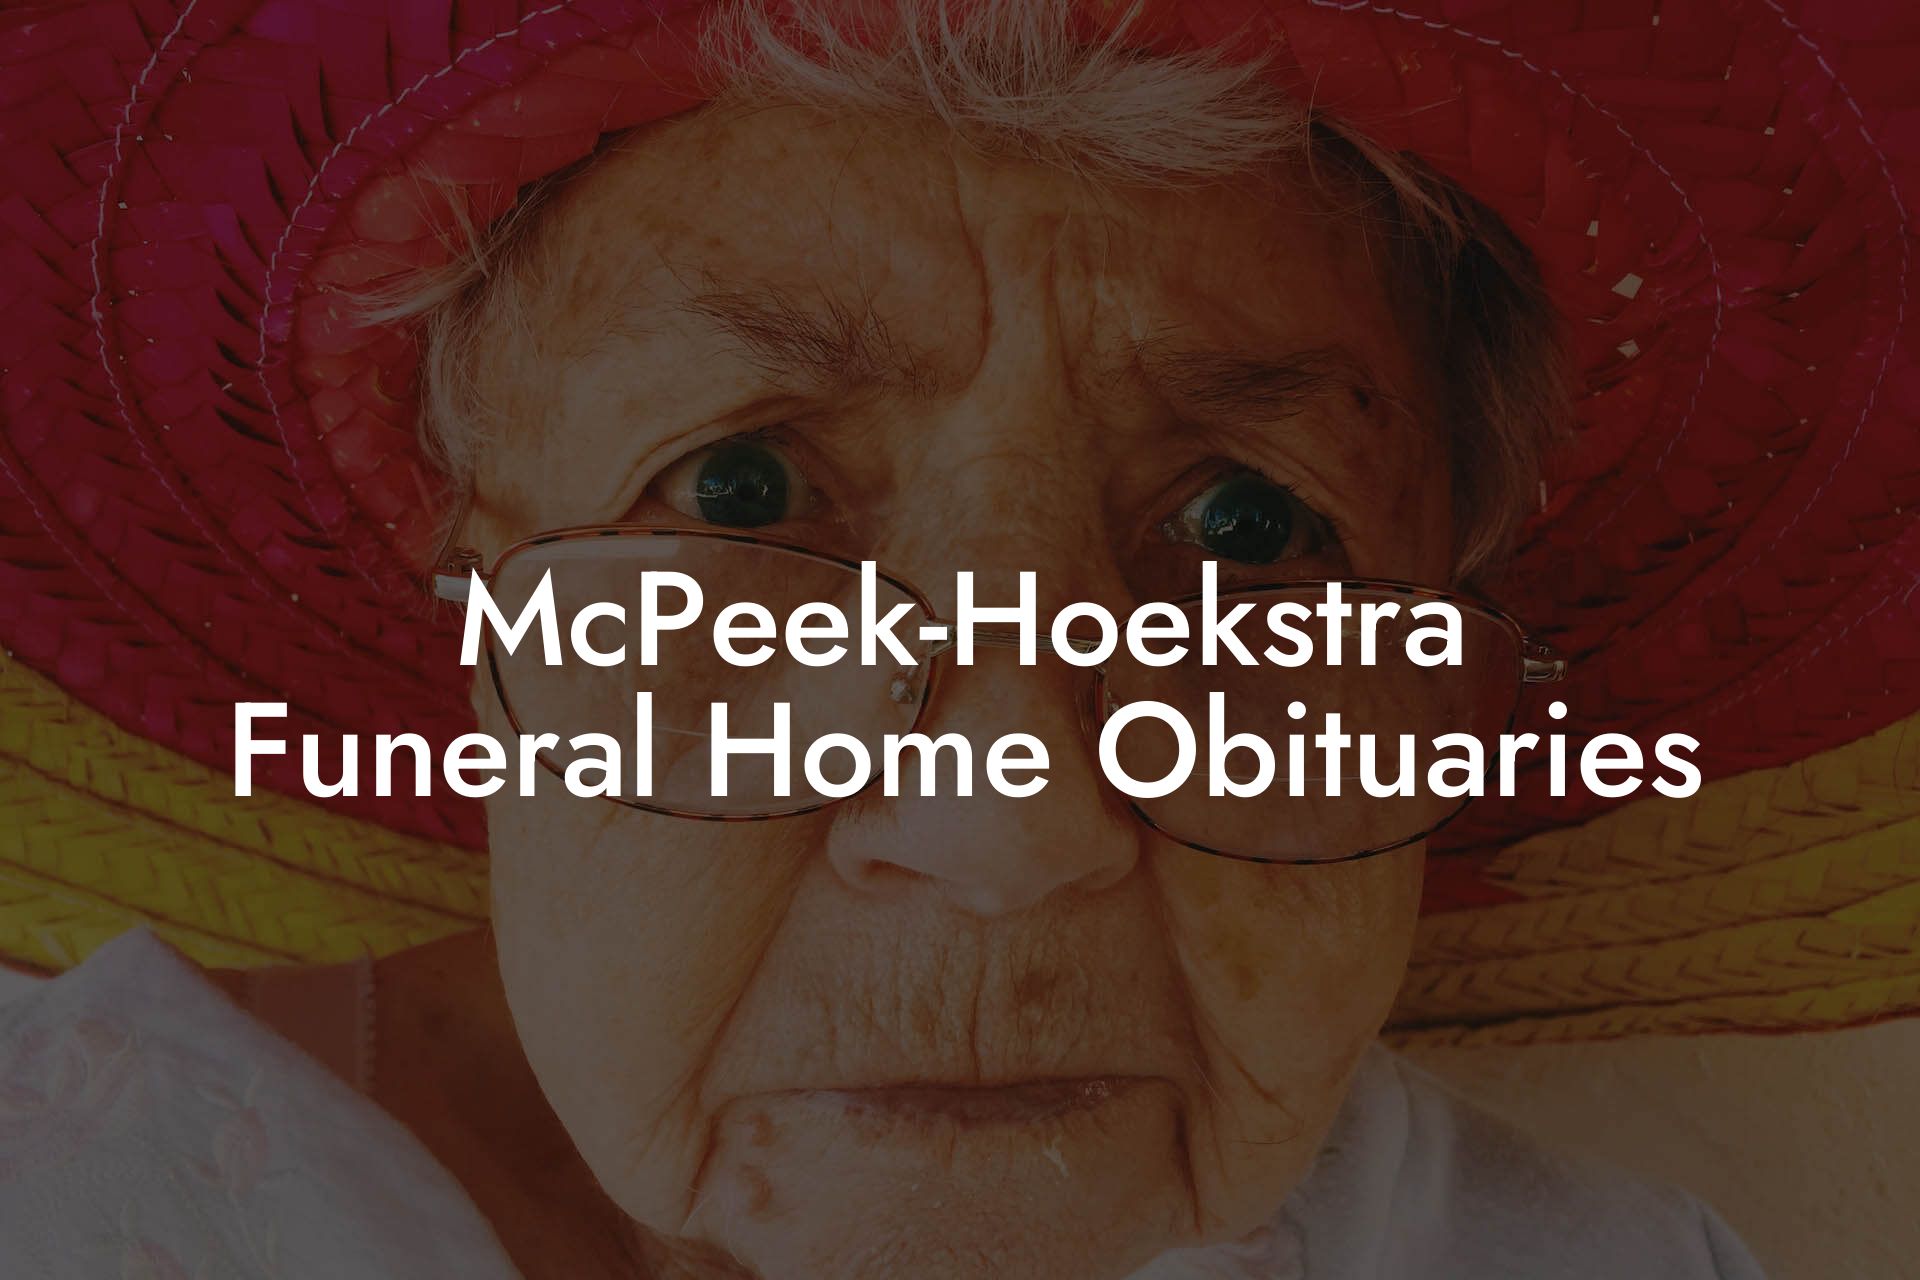 McPeek-Hoekstra Funeral Home Obituaries